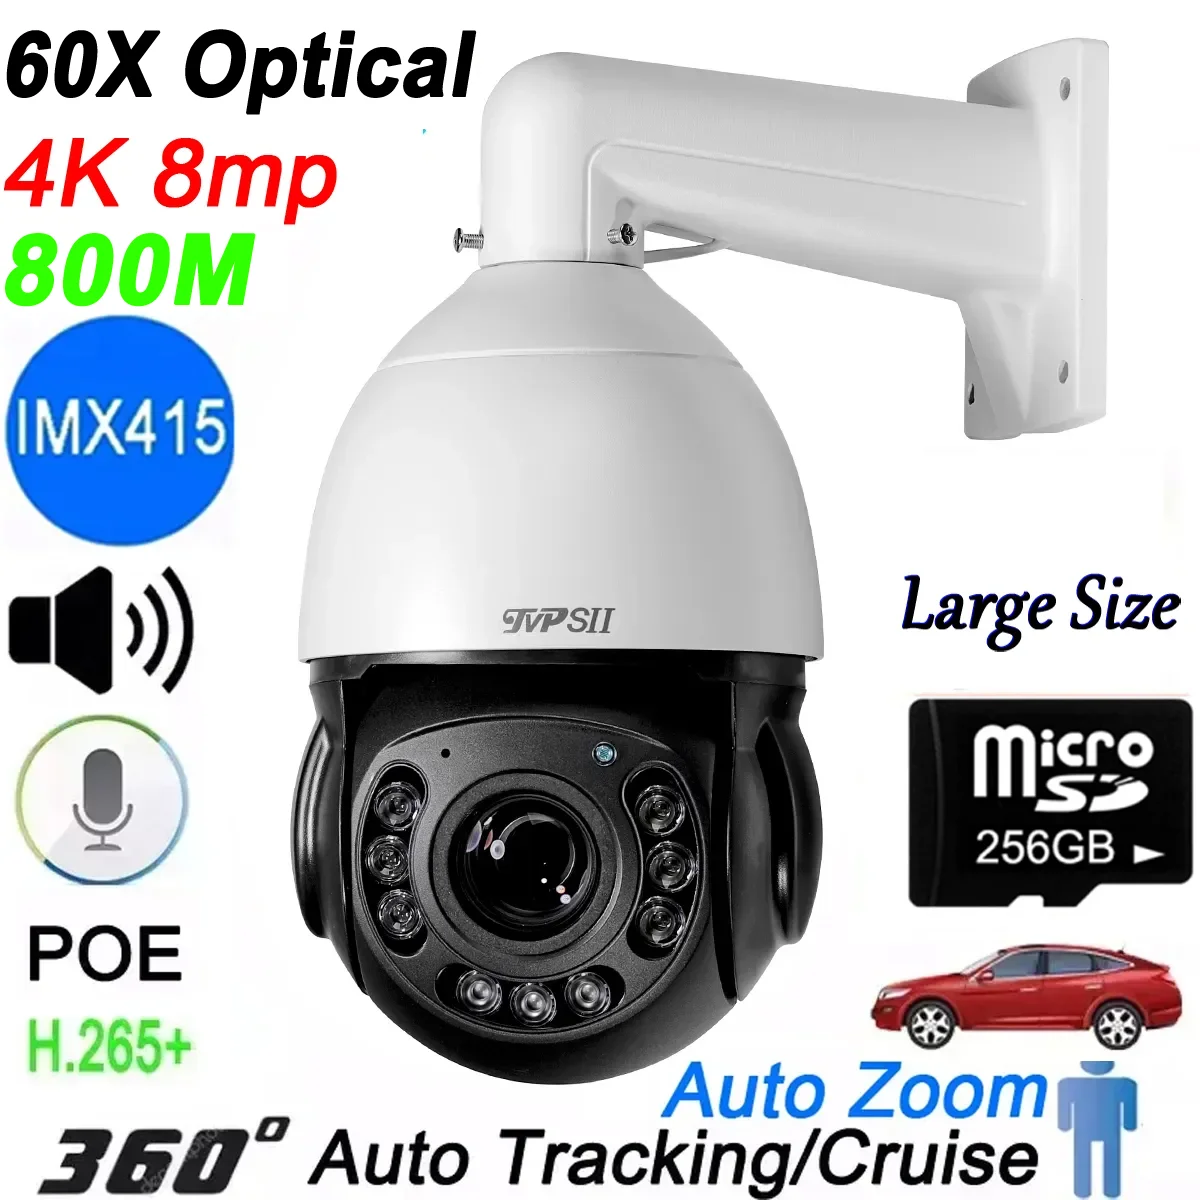 Auto Tracking Car Detection 8MP 4K 60X Optical Zoom 360° Rotation Audio Outdoor ONVIF POE PTZ IP Speed Dome Surveillance Camera